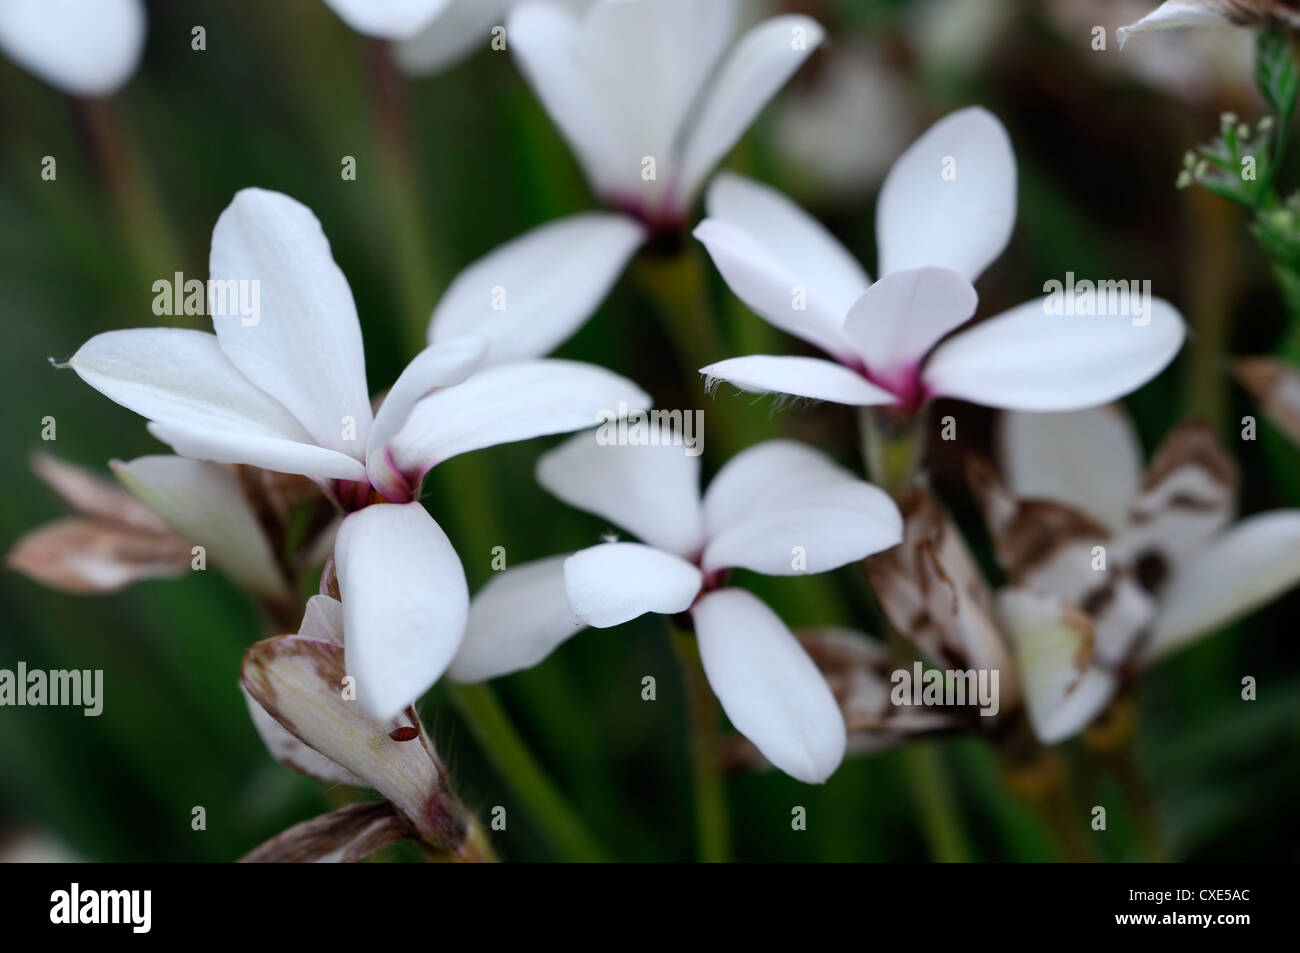 Rhodohypoxis perle white perennial alpine flower bloom blossom closeup close up detail macro Stock Photo